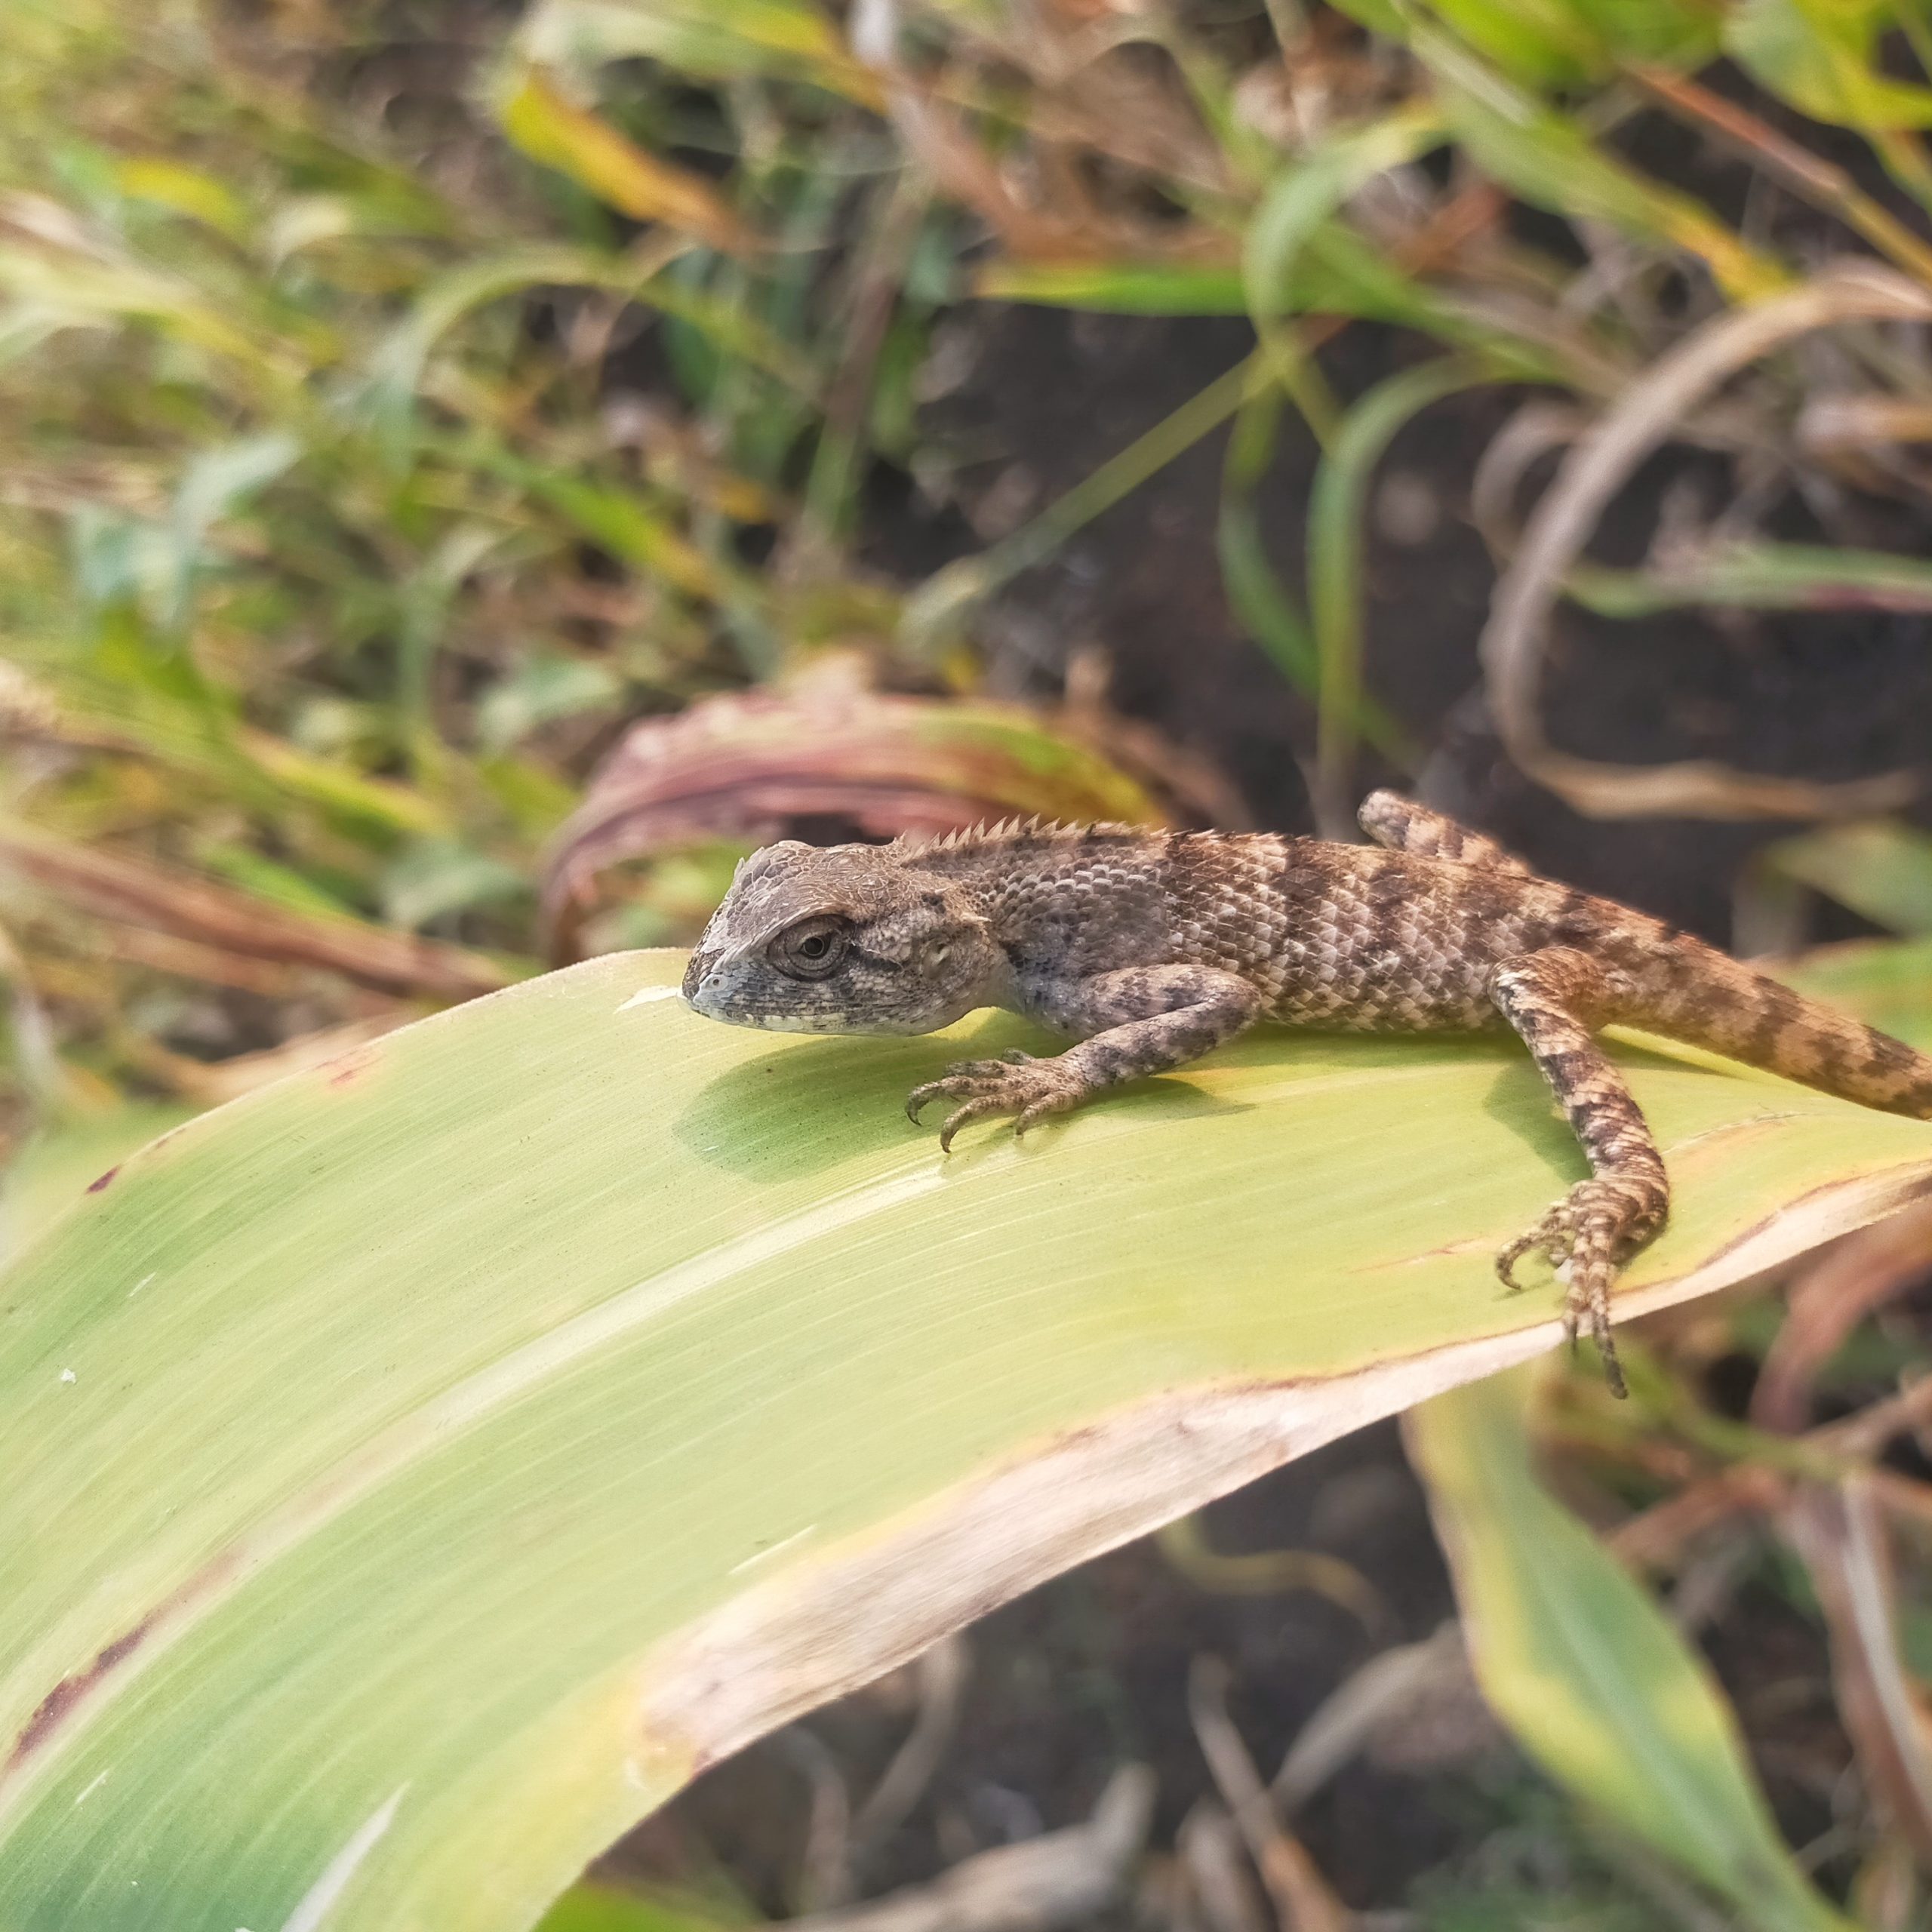 A garden lizard on a leaf